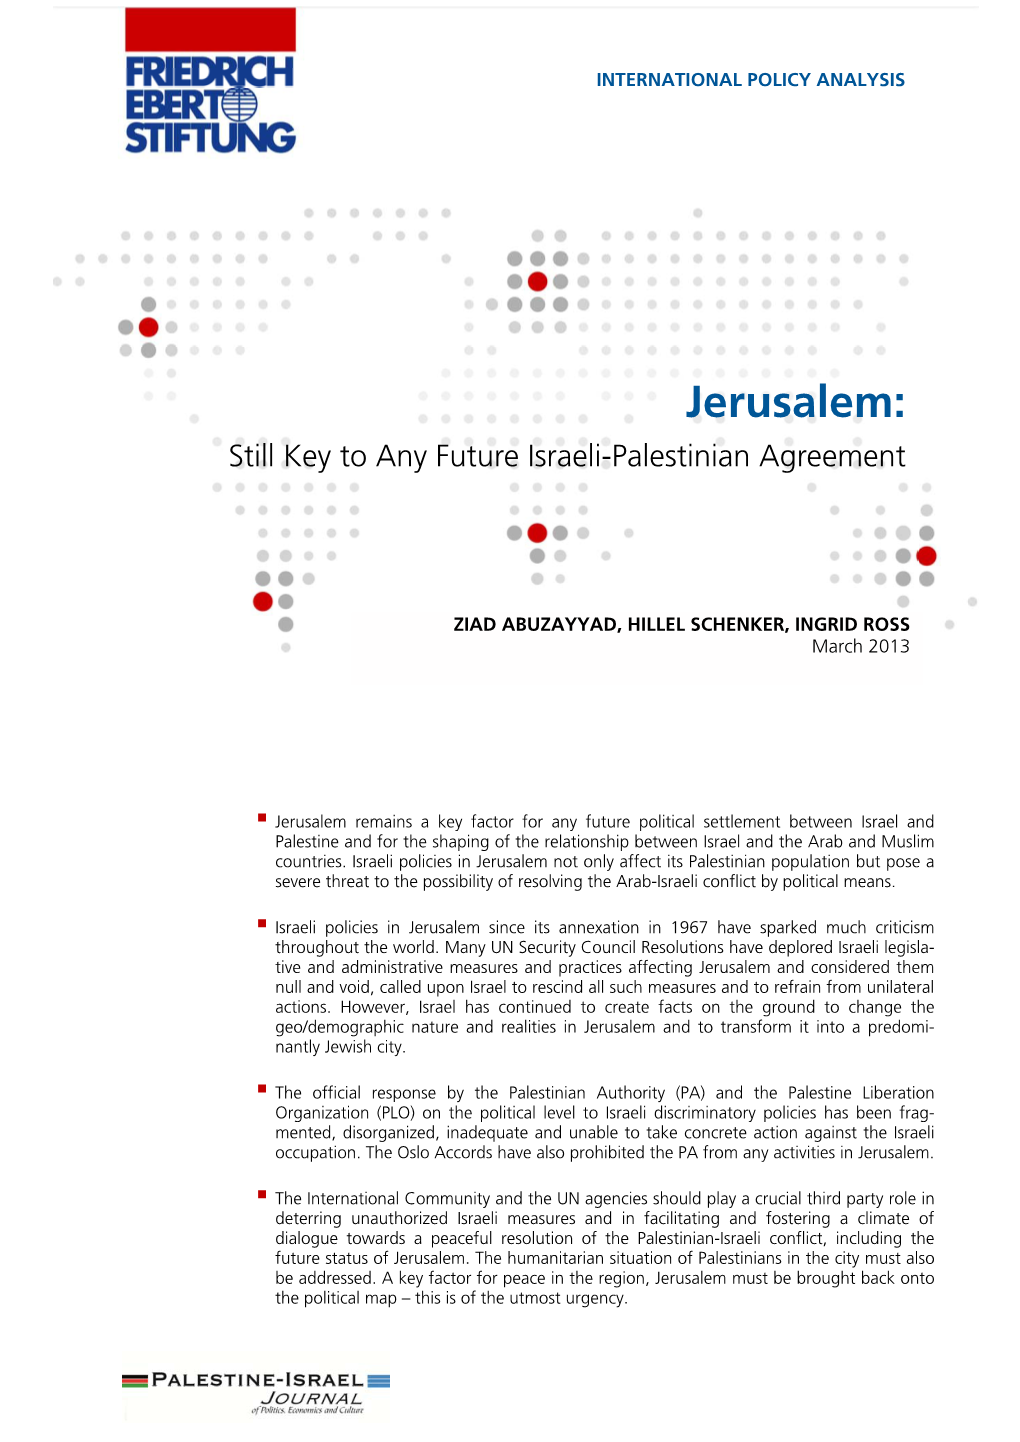 Jerusalem: Still Key to Any Future Israeli-Palestinian Agreement